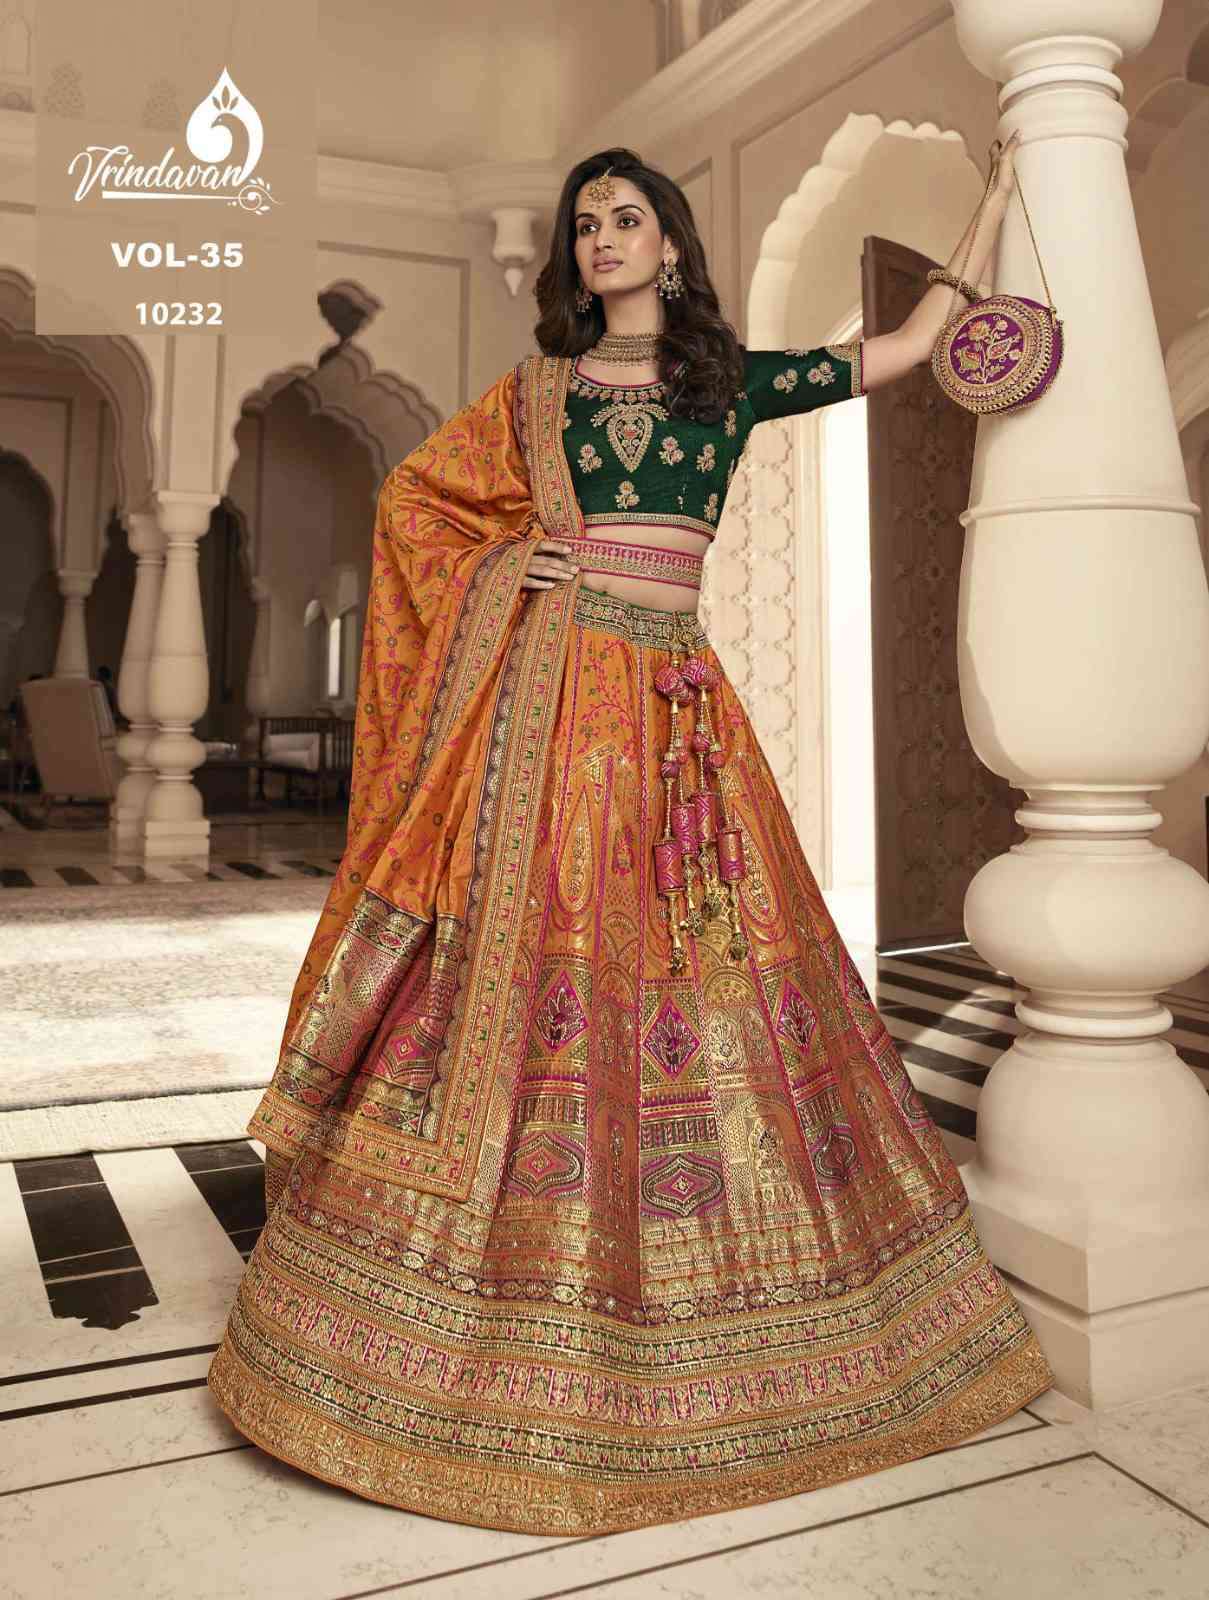 Royal Designer Vrindavan Vol 35 Designer Lehenga Choli Bridal collection